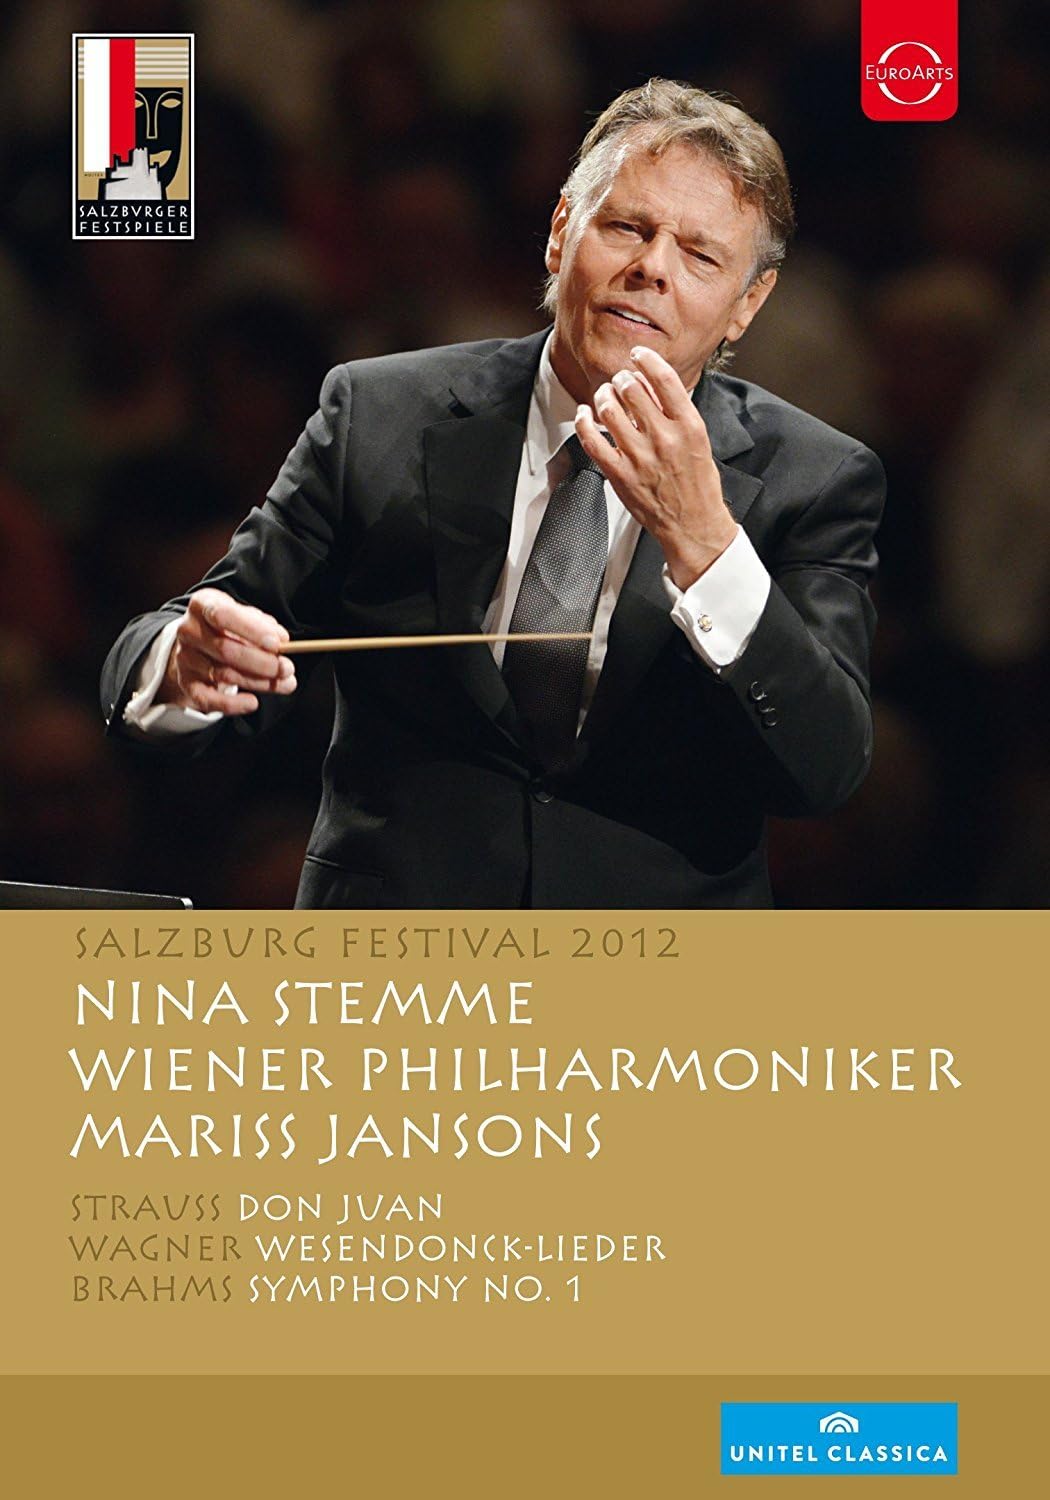 Salzburg Festival 2012 (DVD) | Mariss Jansons, Wiener Philharmoniker, Nina Stemme